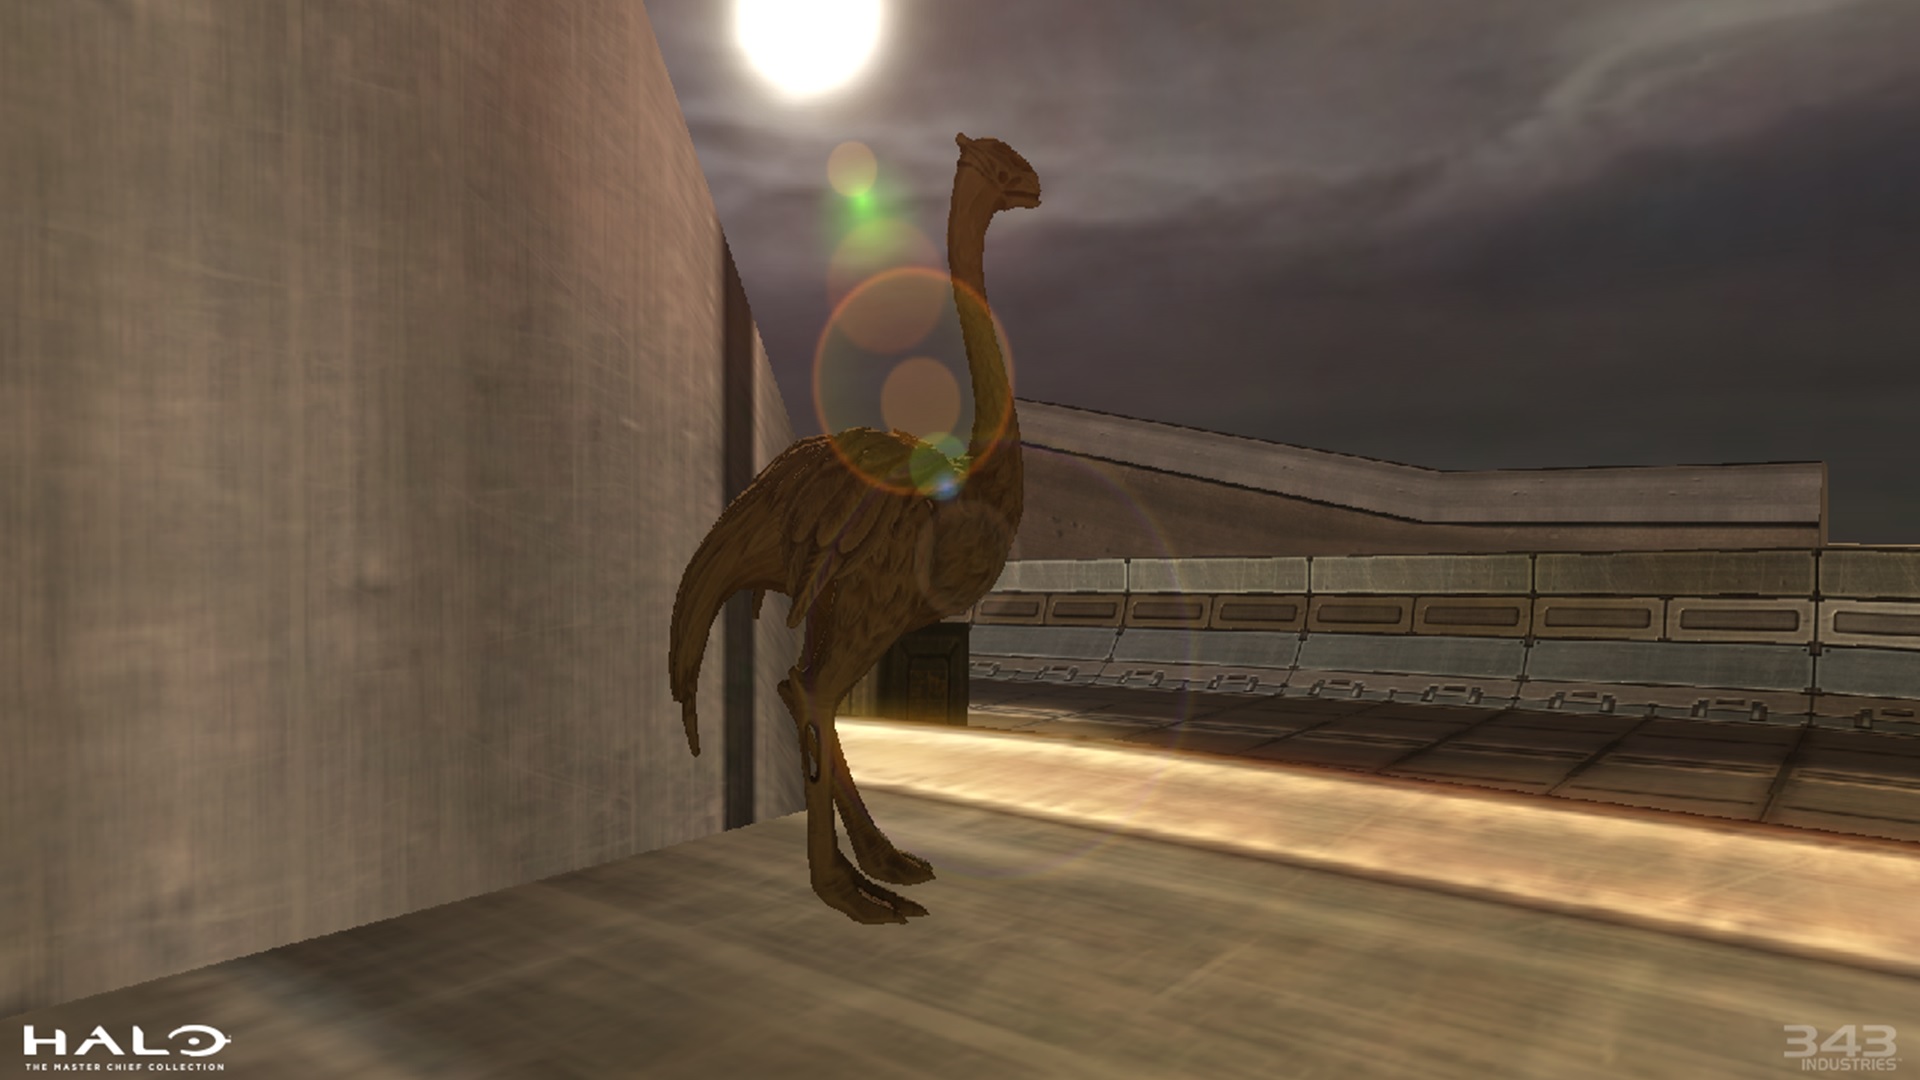 Halo 2 Classic screenshot of a golden moa